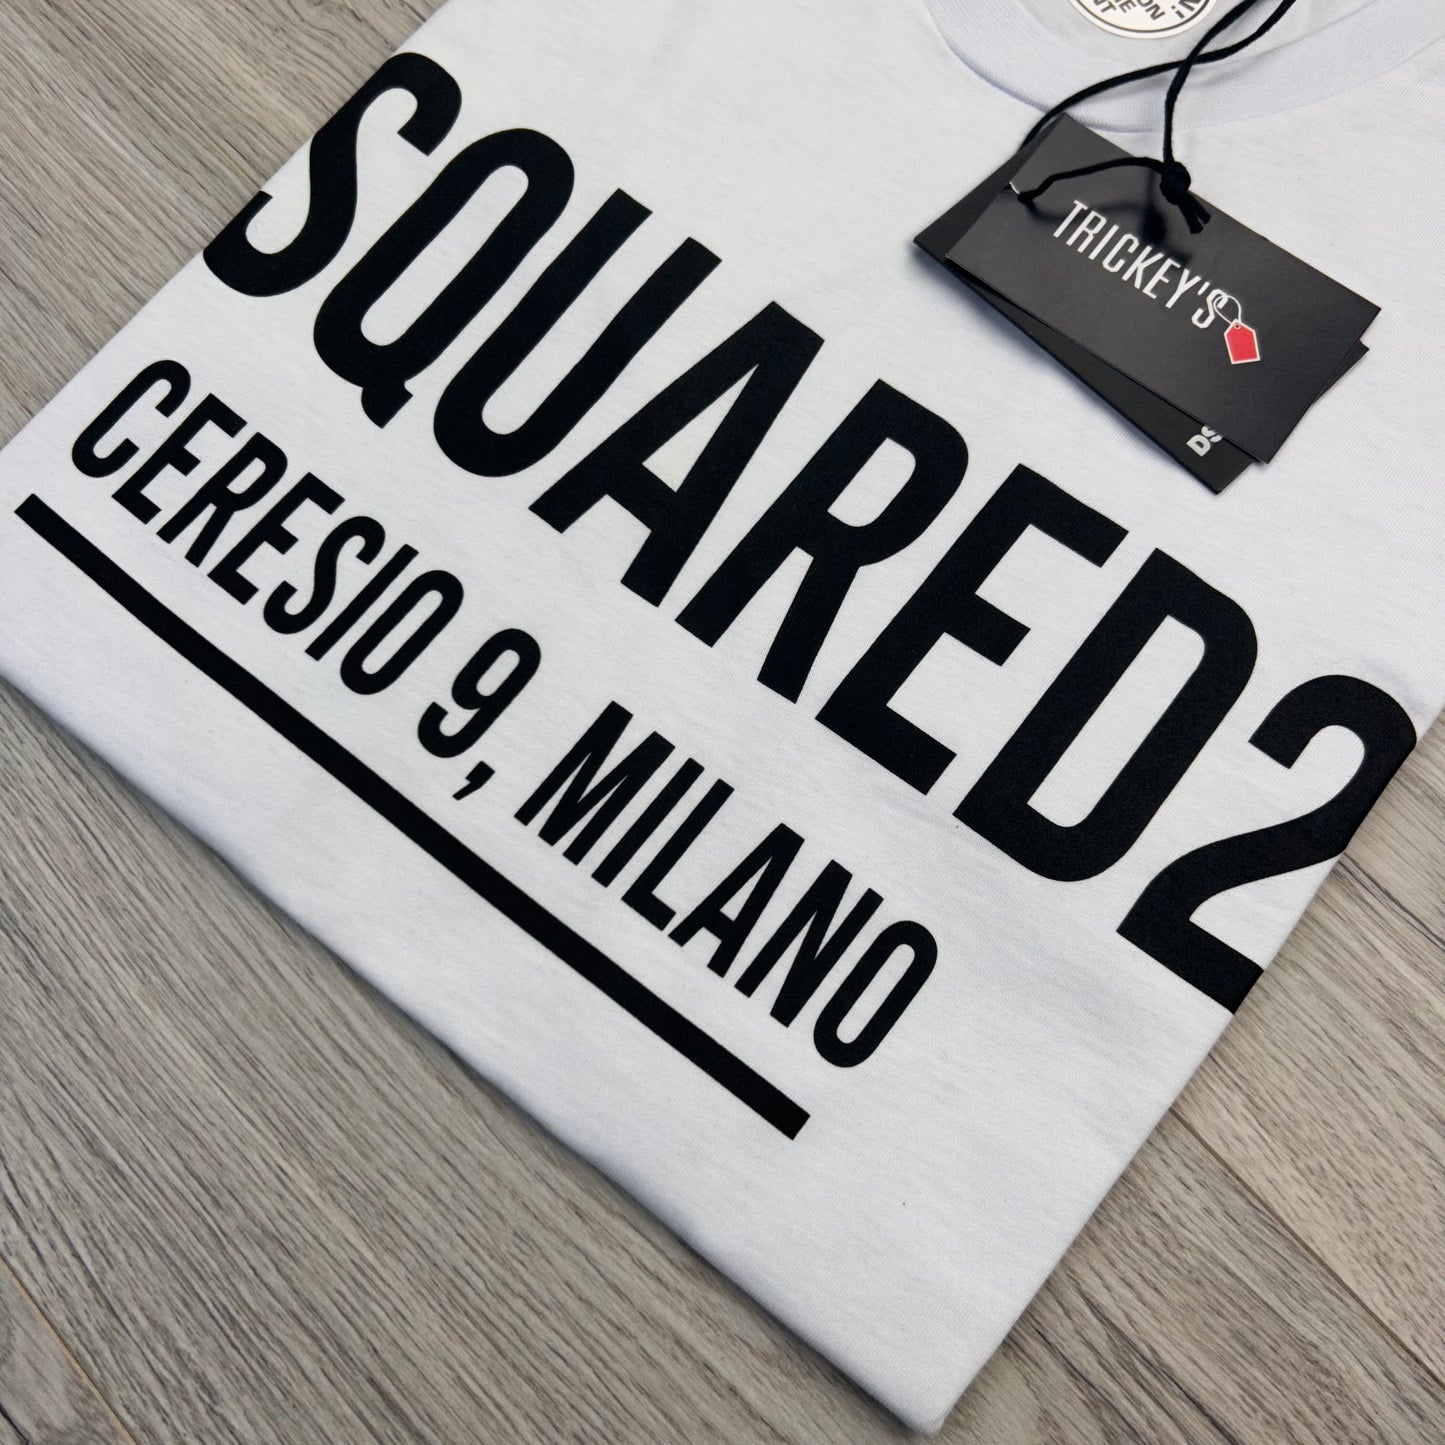 Dsquared2 Ceresio 9, Milano Men’s White T-shirt